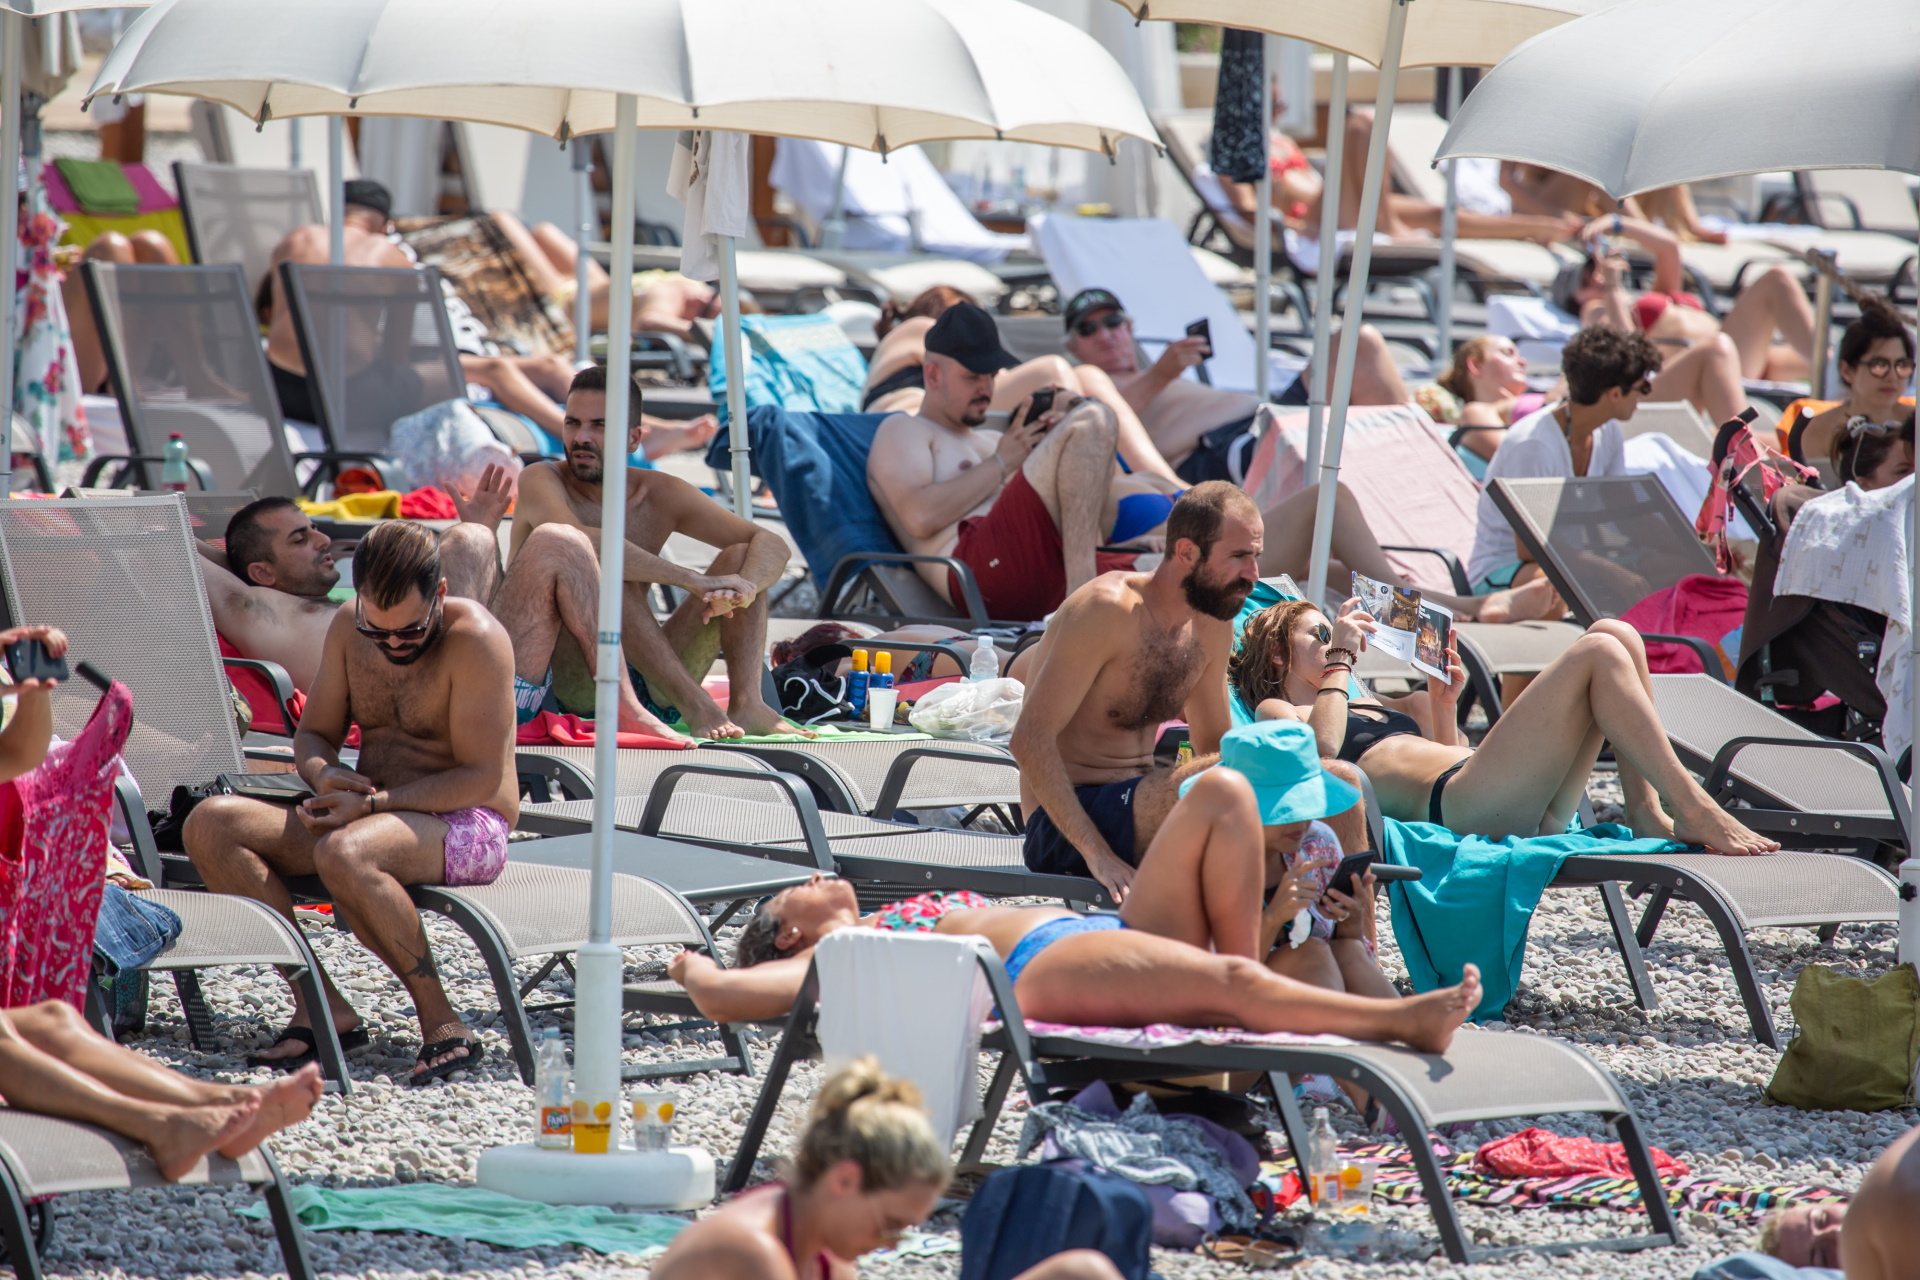 09.08.2018., Sunset beach, Dubrovnik - Uvala Lapad, Sunset beach, najtopliji dan i najjace UV zracenje ocito ne smeta mnogobrojnim kupacima.
Photo: Grgo Jelavic/PIXSELL